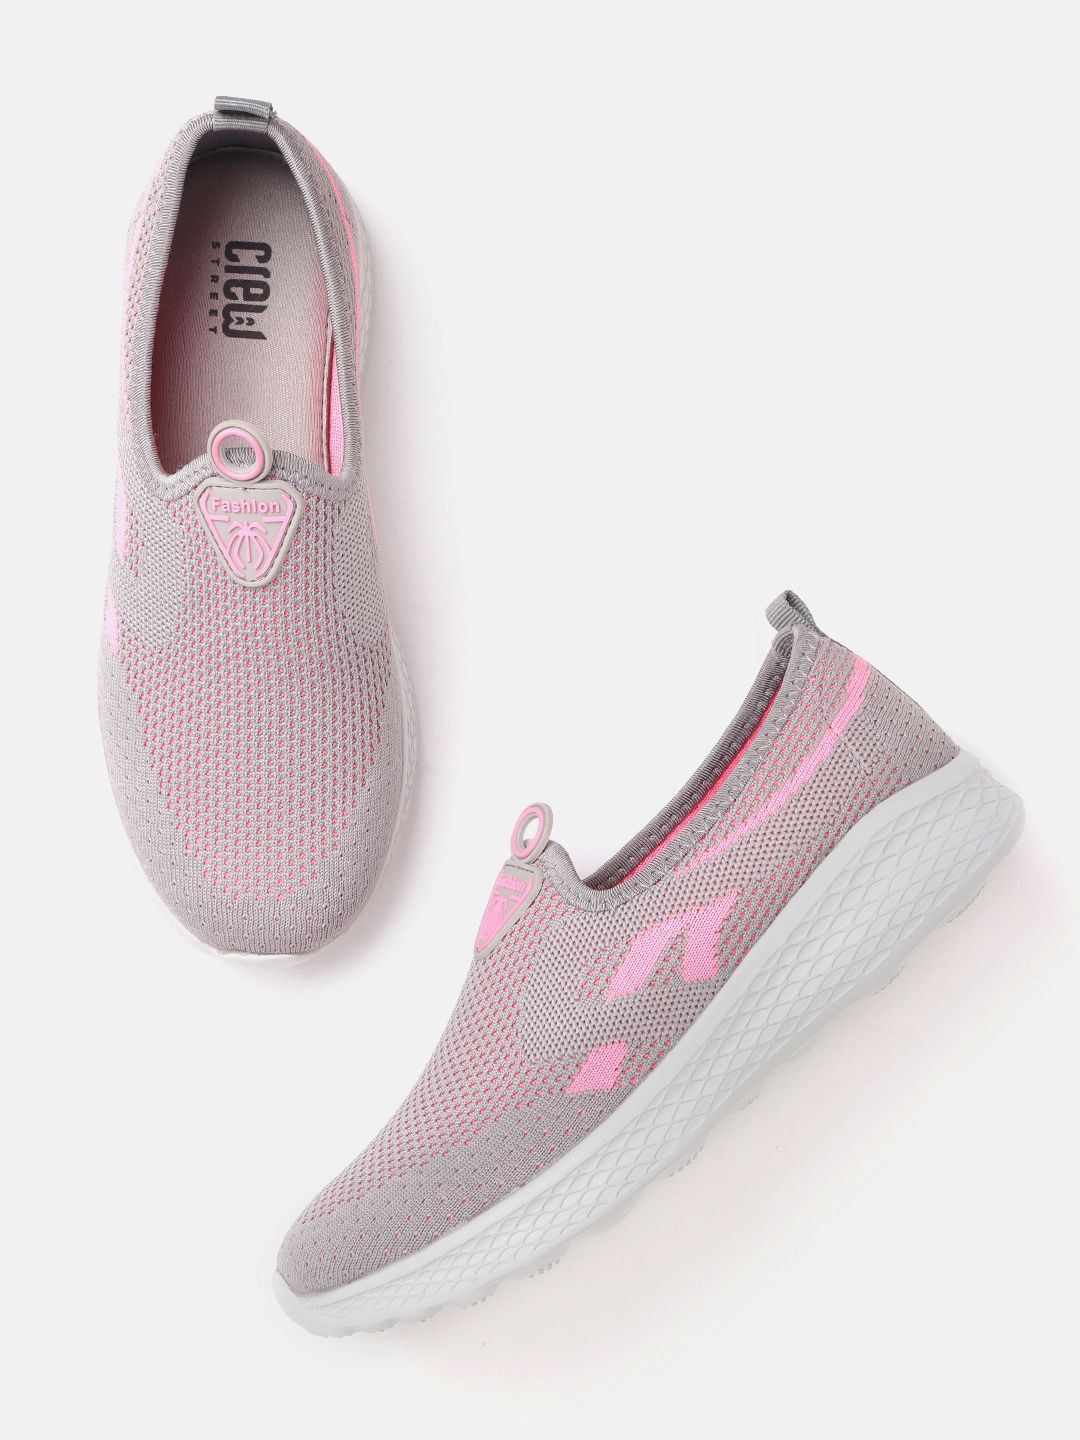 Crew STREET Women Grey & Pink Woven Design Walking Shoes Price in India